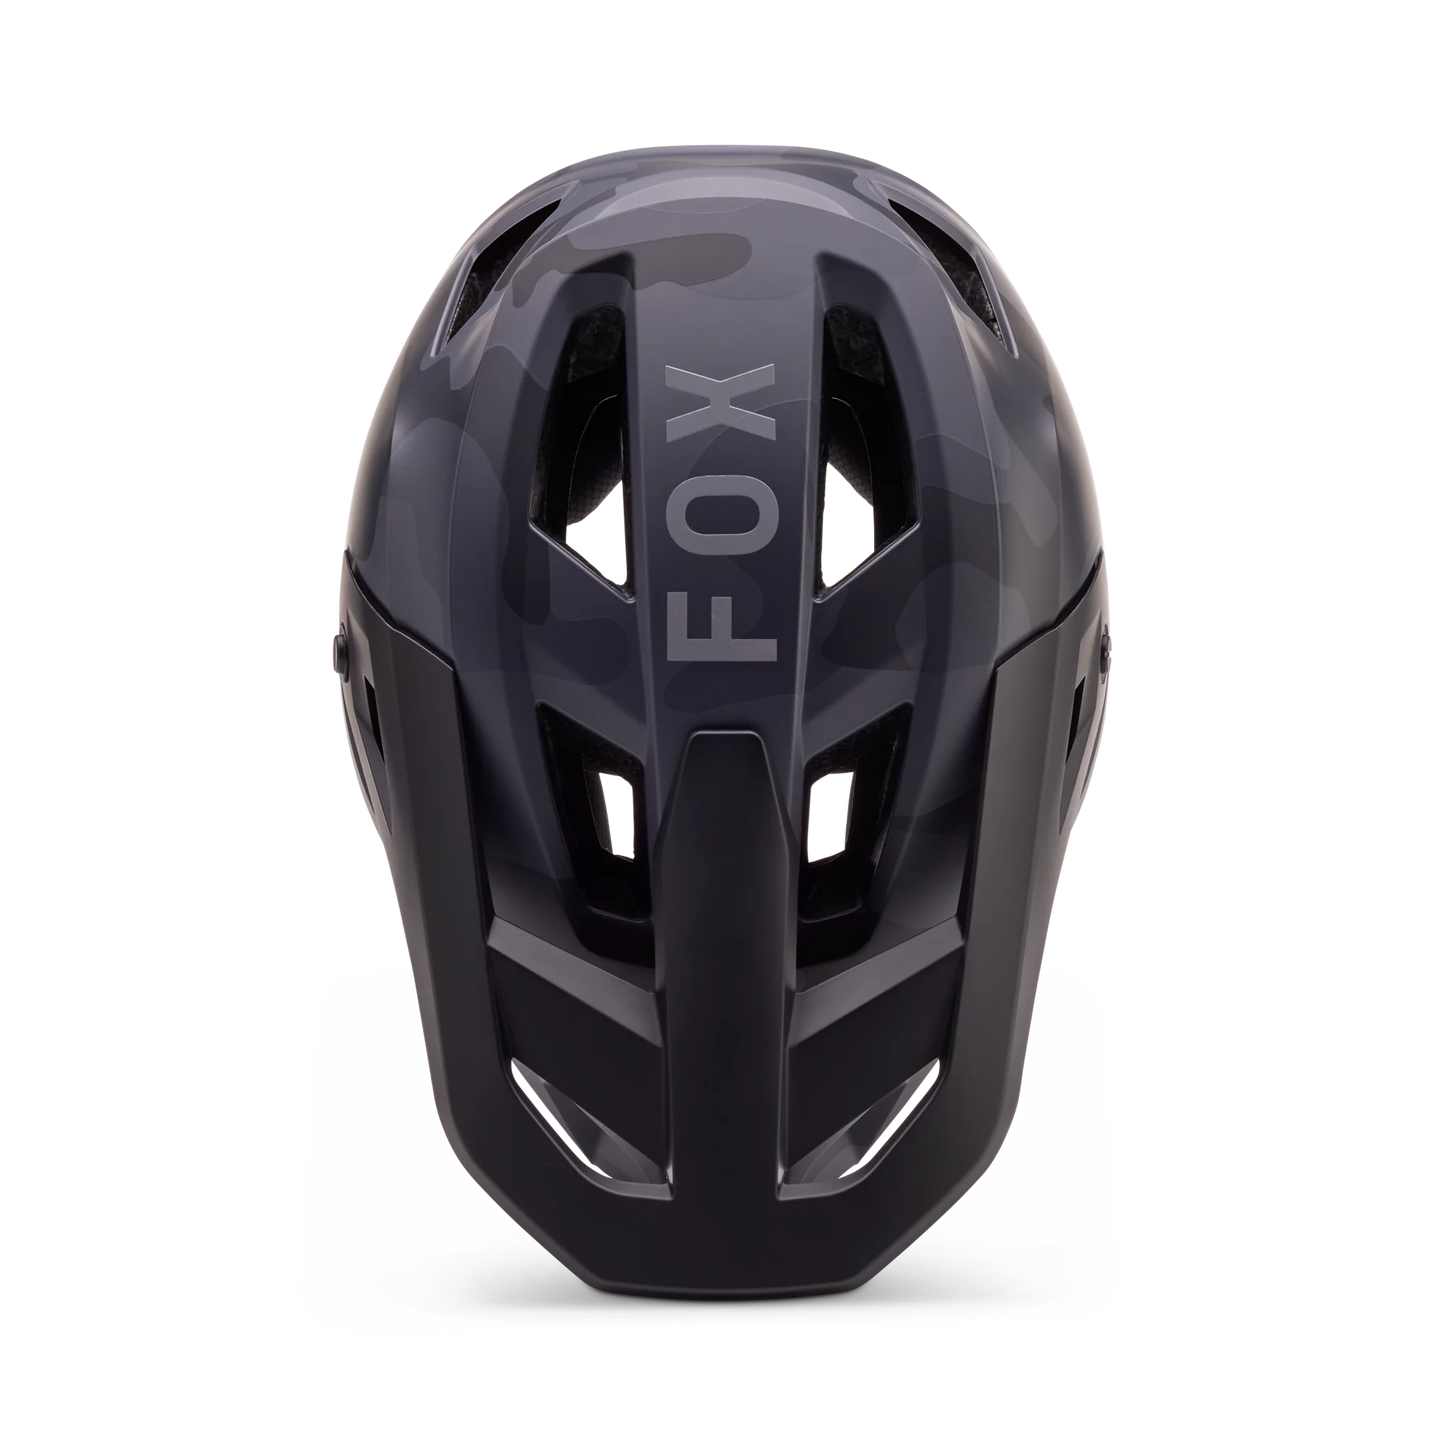 Fox Racing Rampage Full Face Helmet - Camo - Black